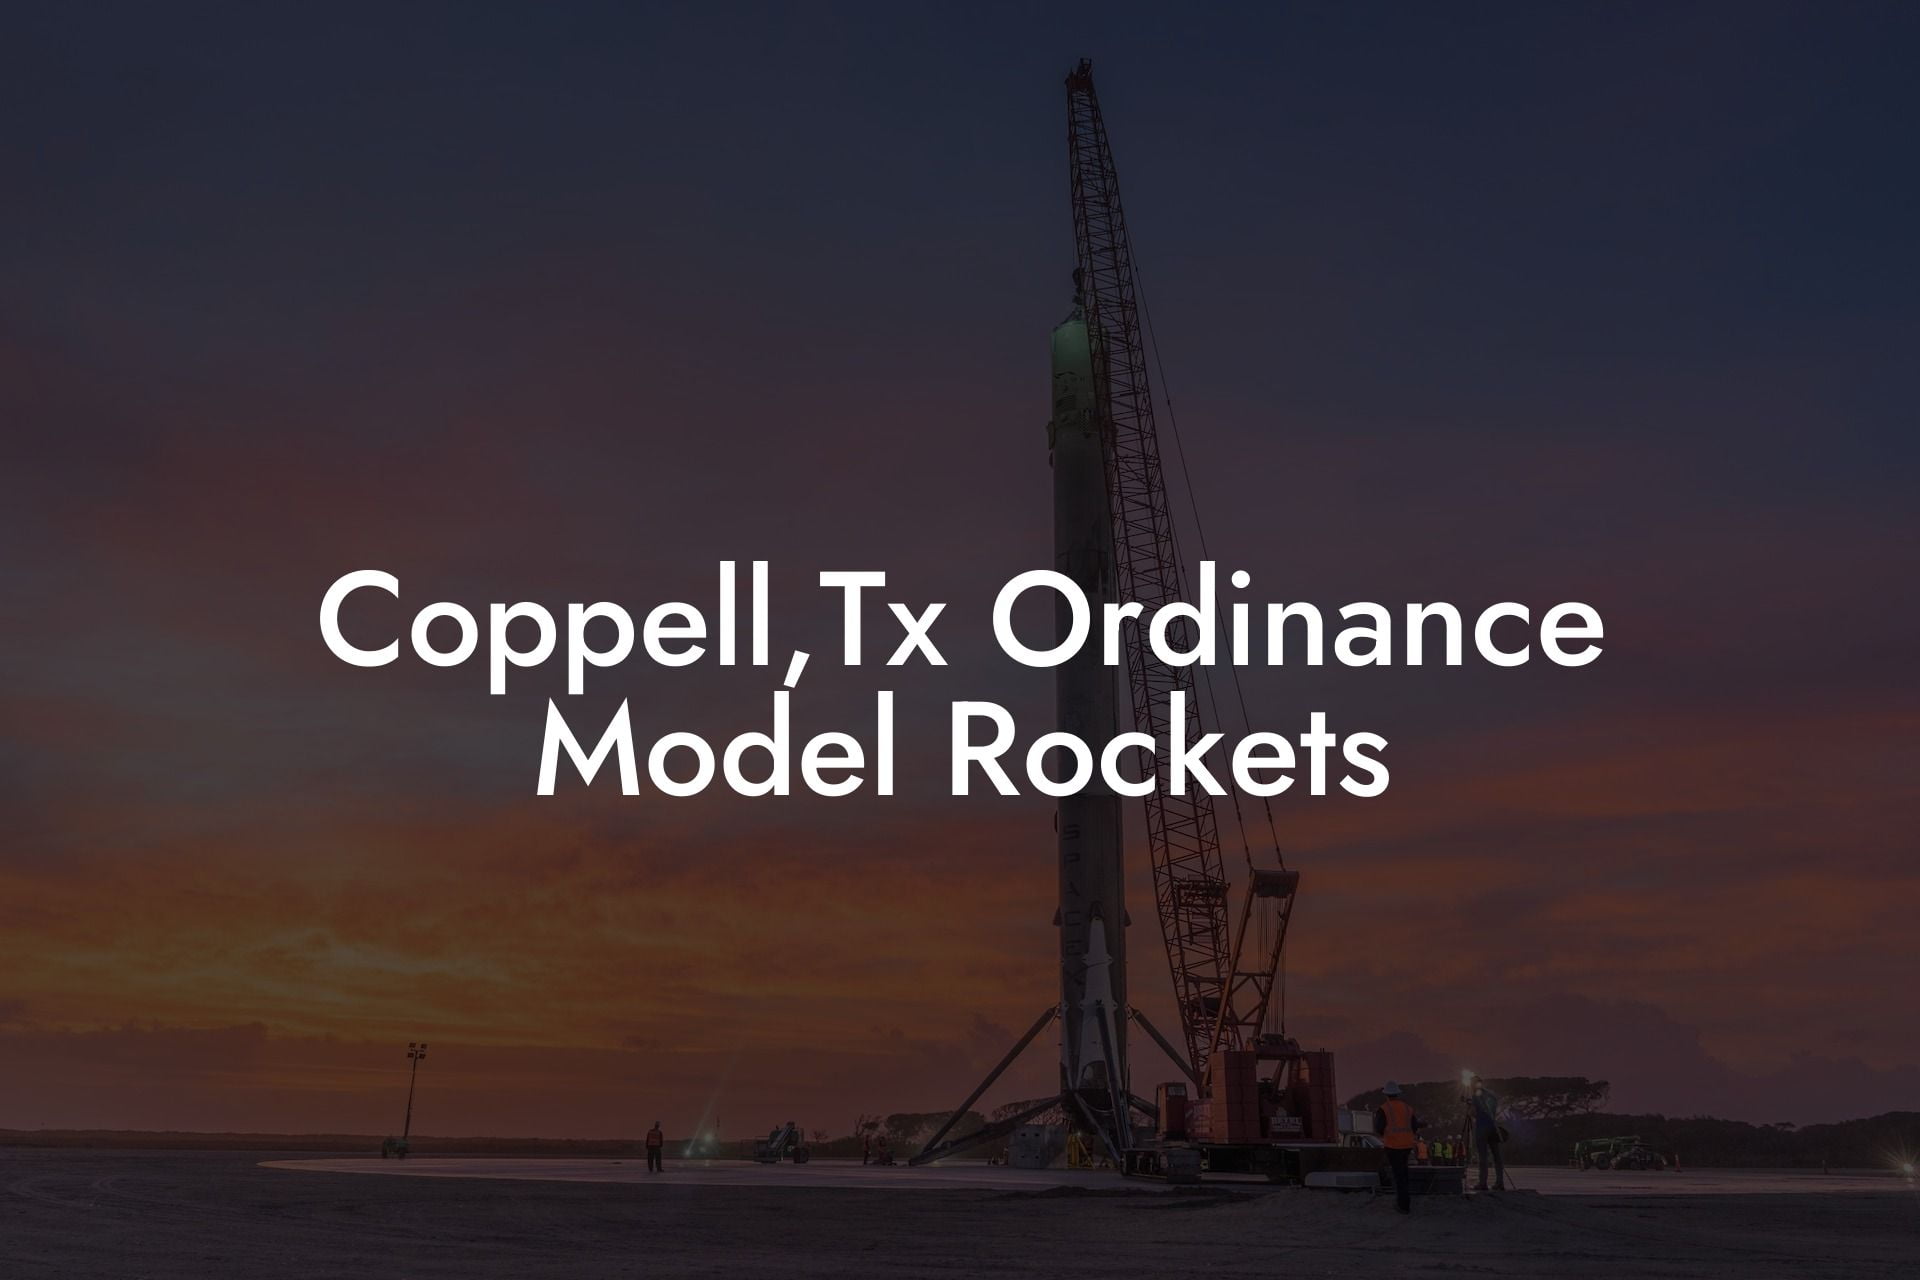 Coppell,Tx Ordinance Model Rockets